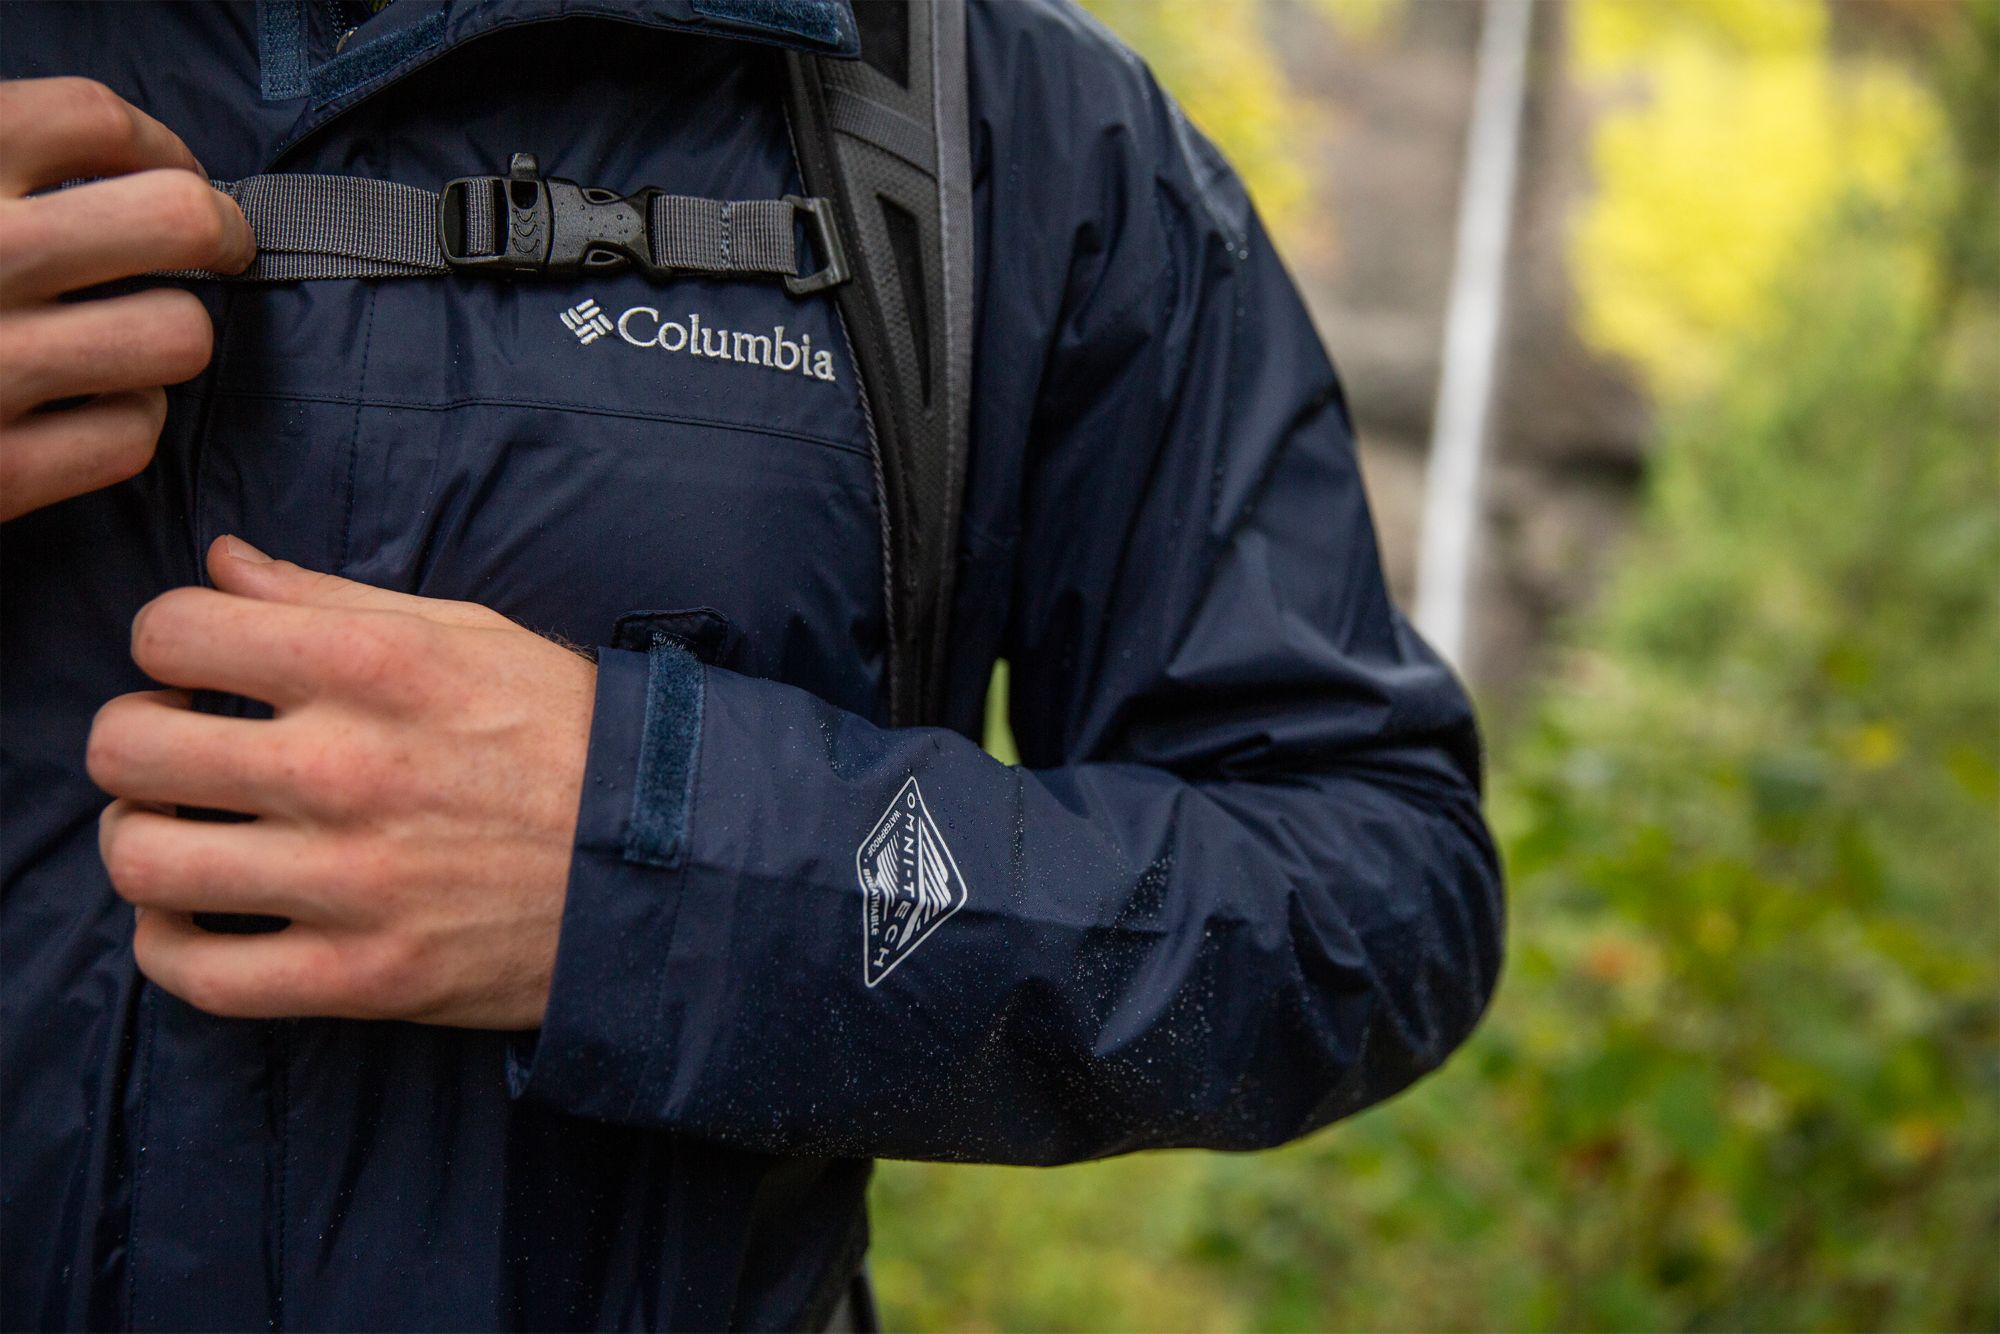 Columbia Men's Watertight II Rain Jacket